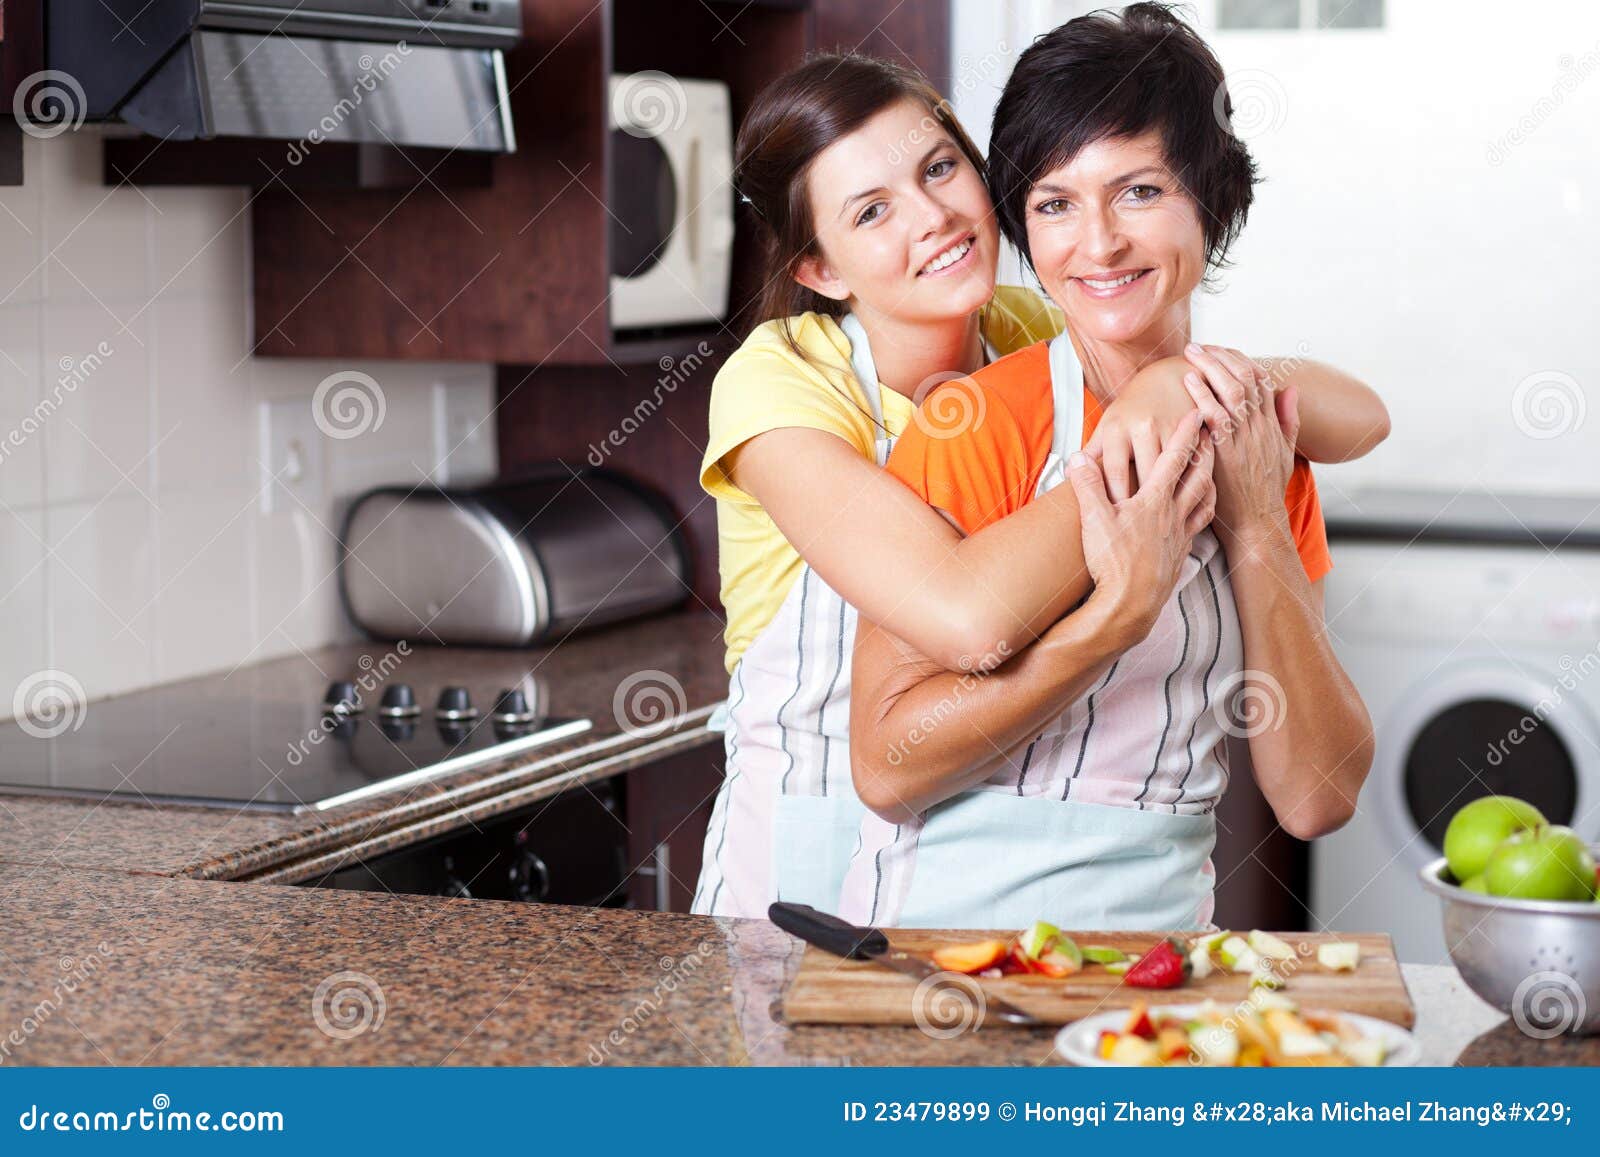 Мама с сыном русская кухня. Мама на кухне. Мама и подросток на кухне. Подросток на кухне. Фотосессия мама и дети на кухне.